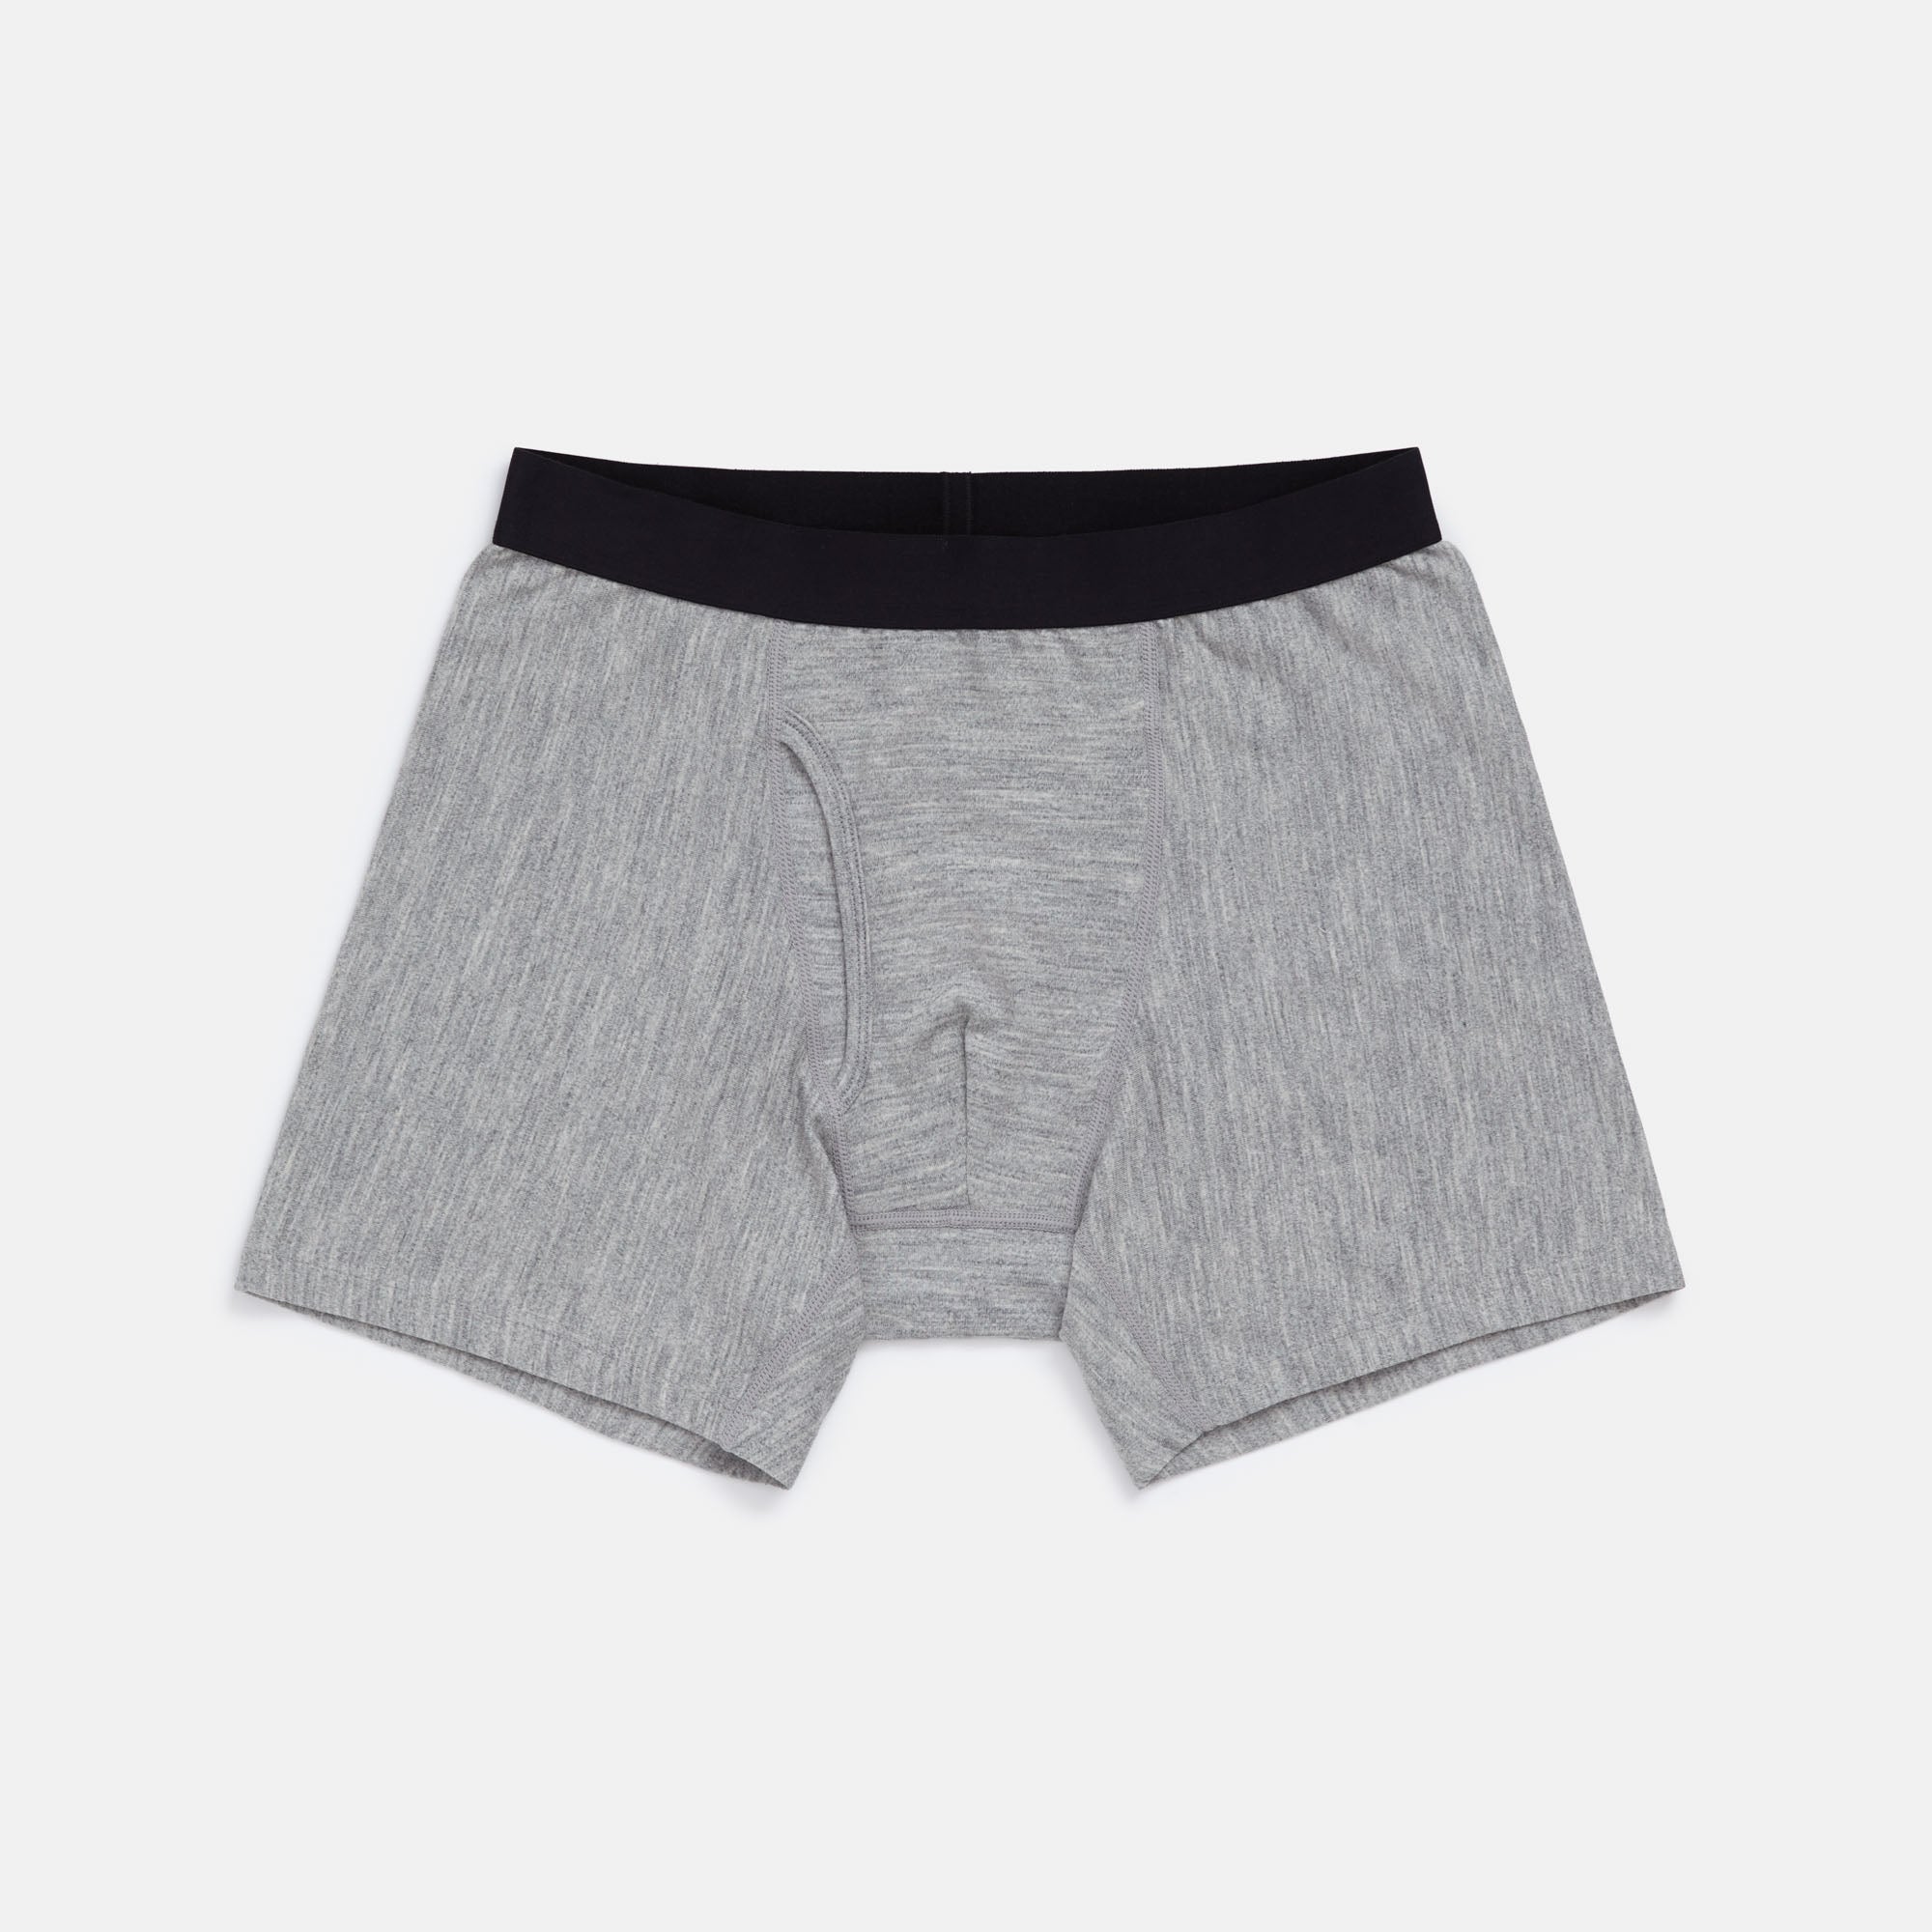 MERIWOOL Merino Wool Men's Boxer Brief Underwear – Charcoal Gray